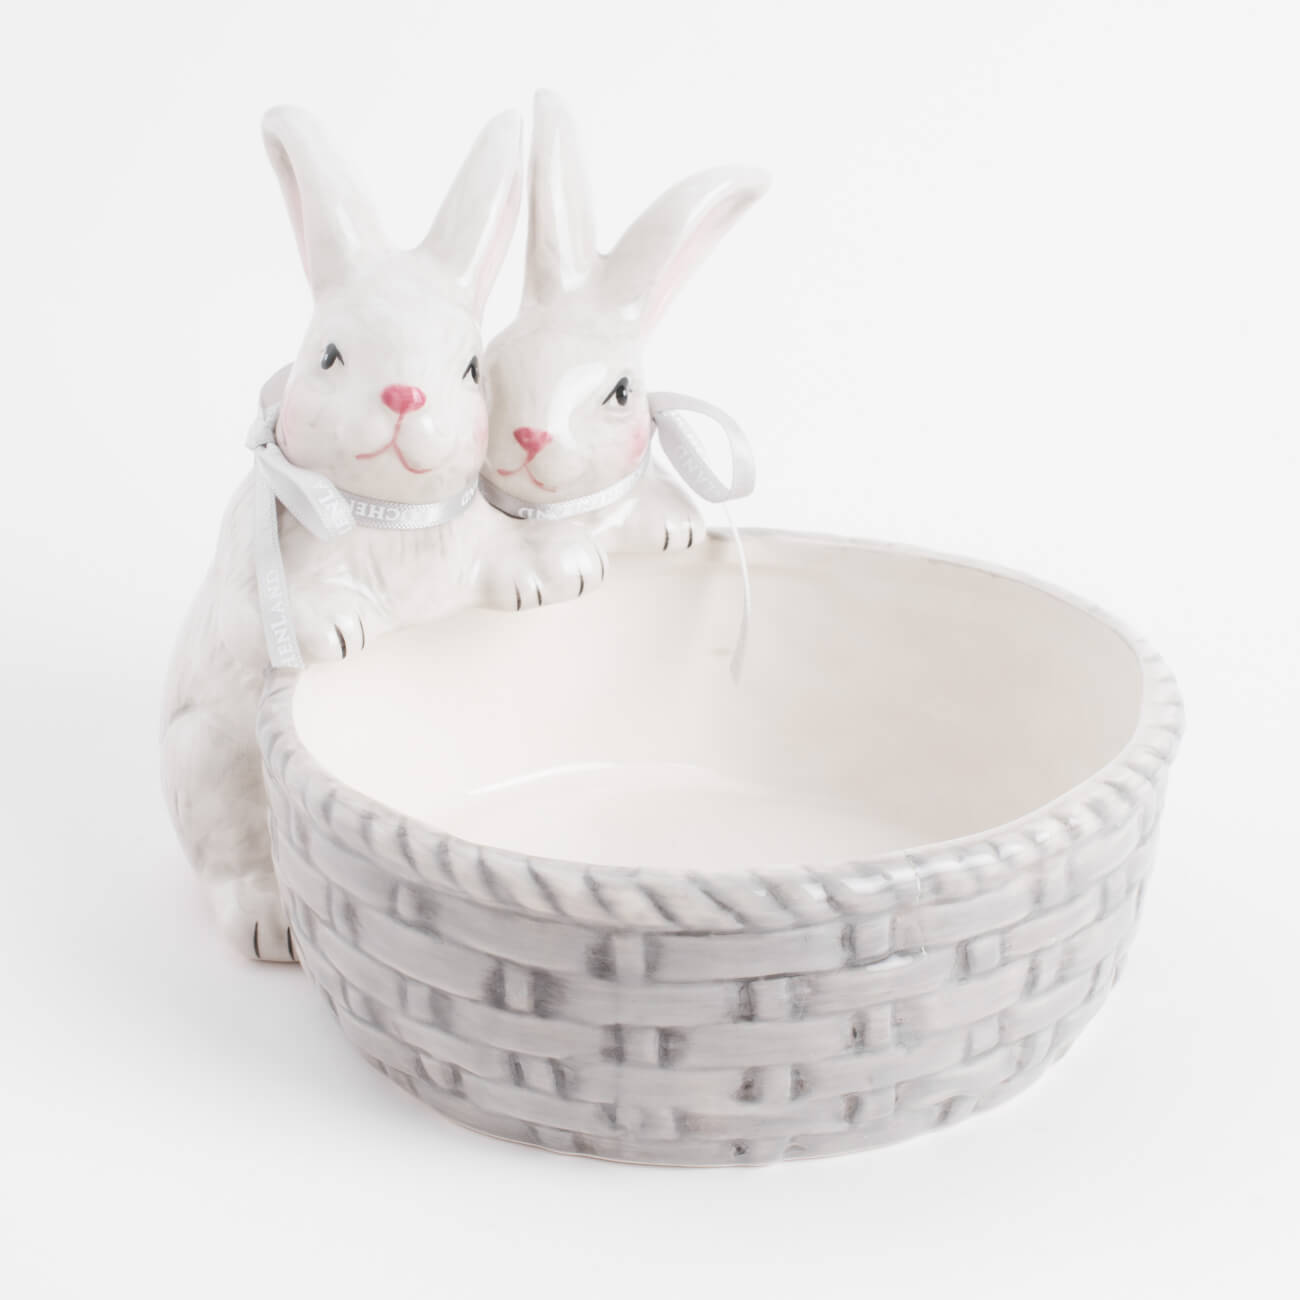 Конфетница, 16х14 см, керамика, серо-молочная, Кролики, Pure Easter конфетница 16х14 см керамика серо молочная кролики pure easter